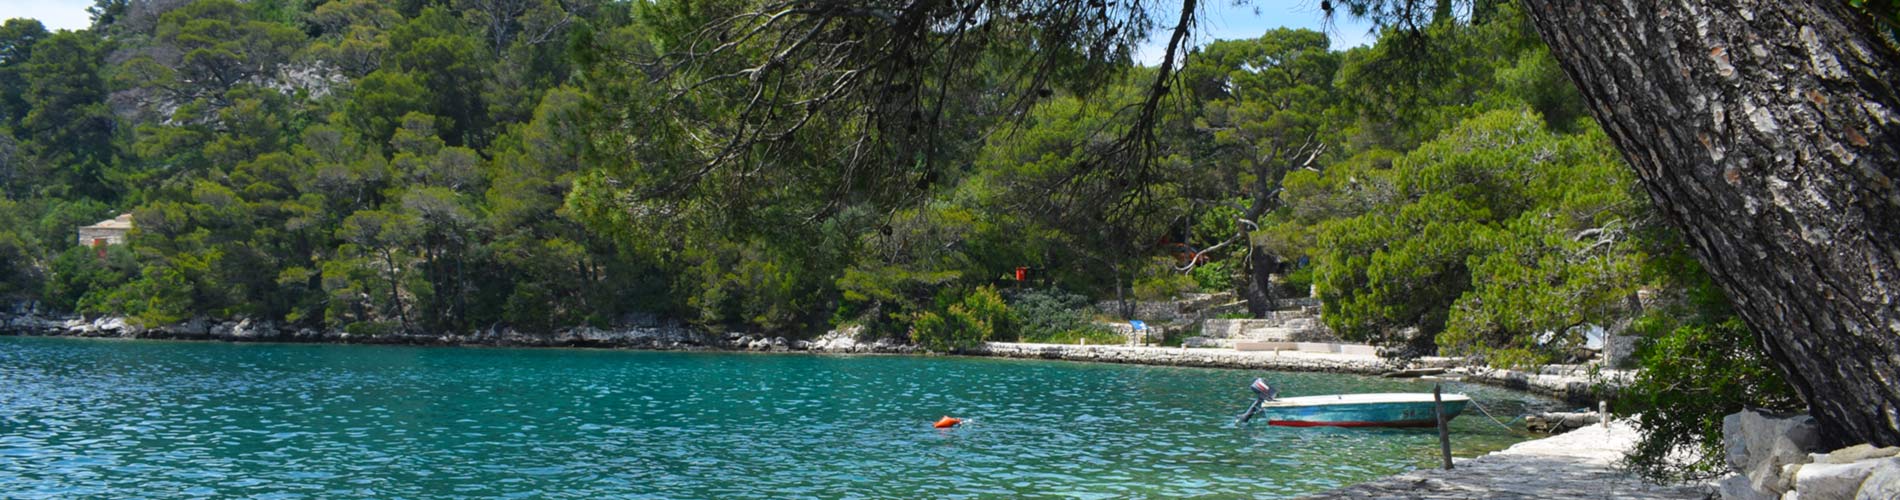 Mljet Island Dock Croatia Holidays.jpg